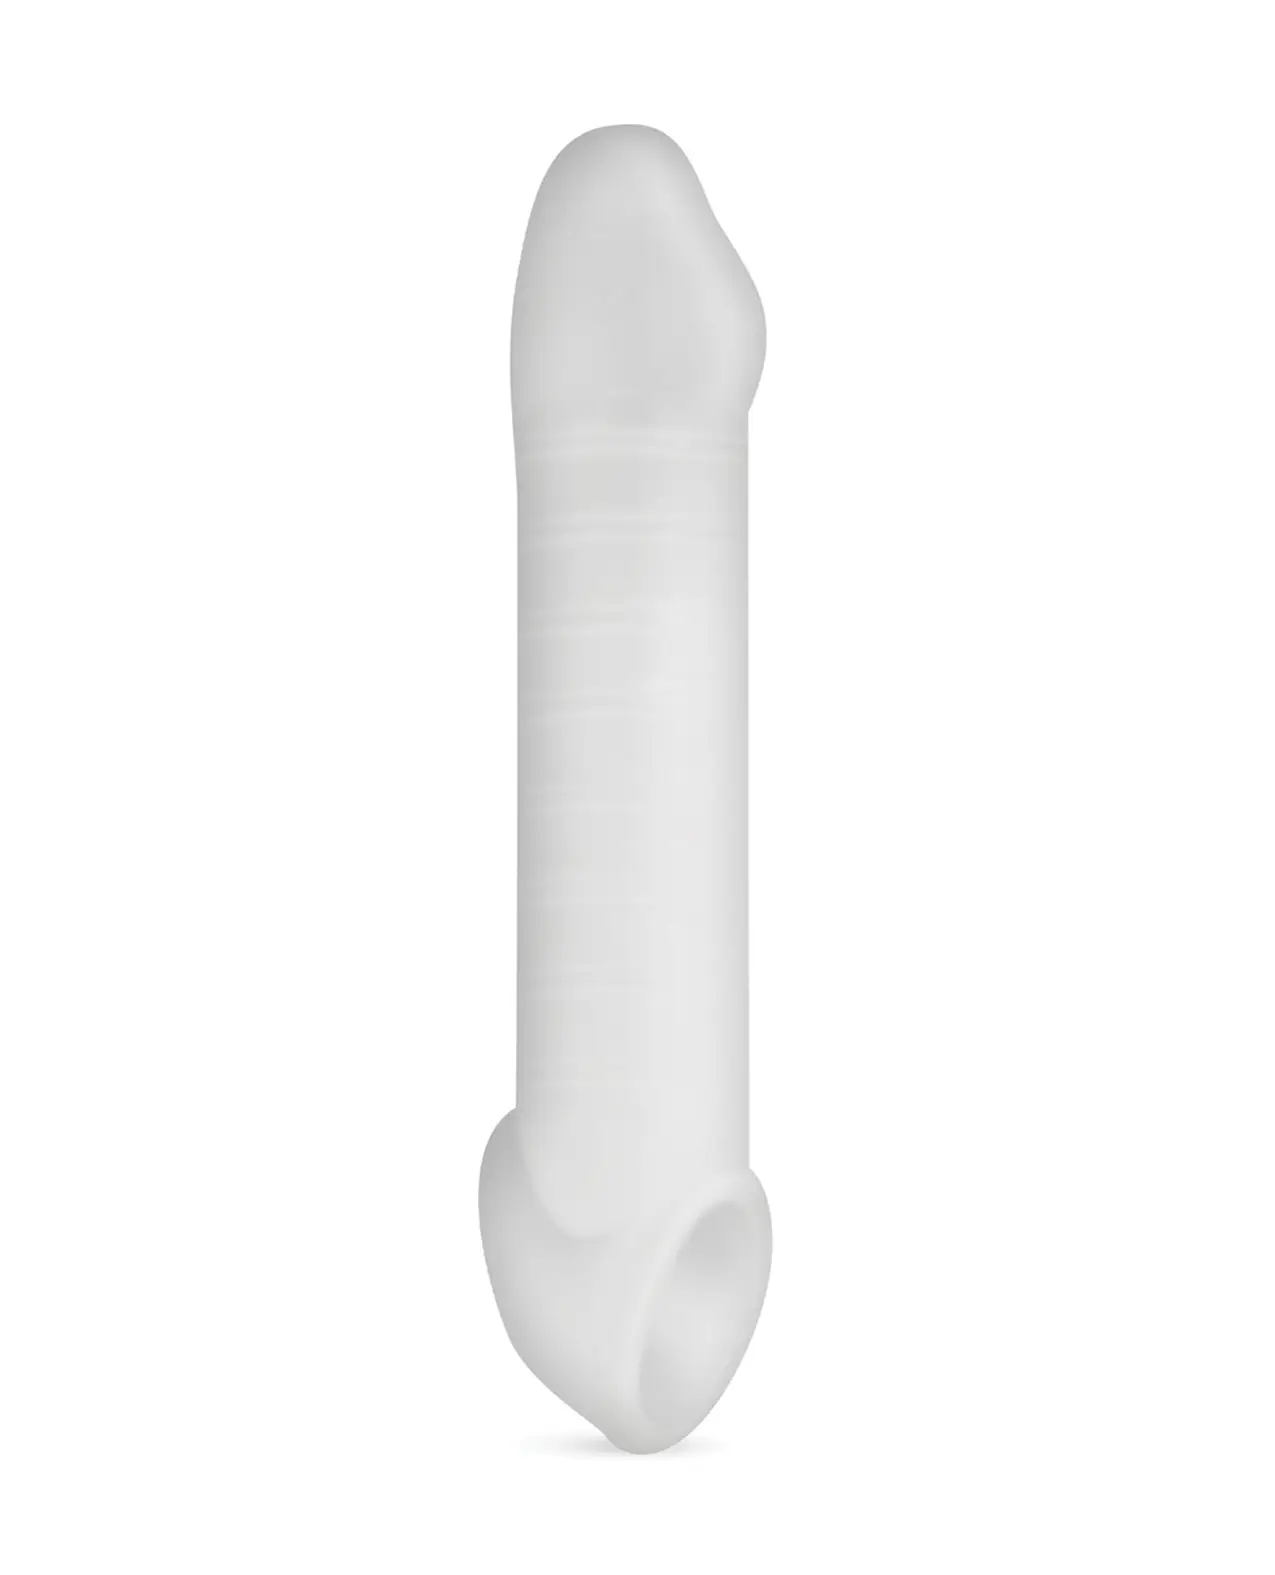 Penis Sleeve in white